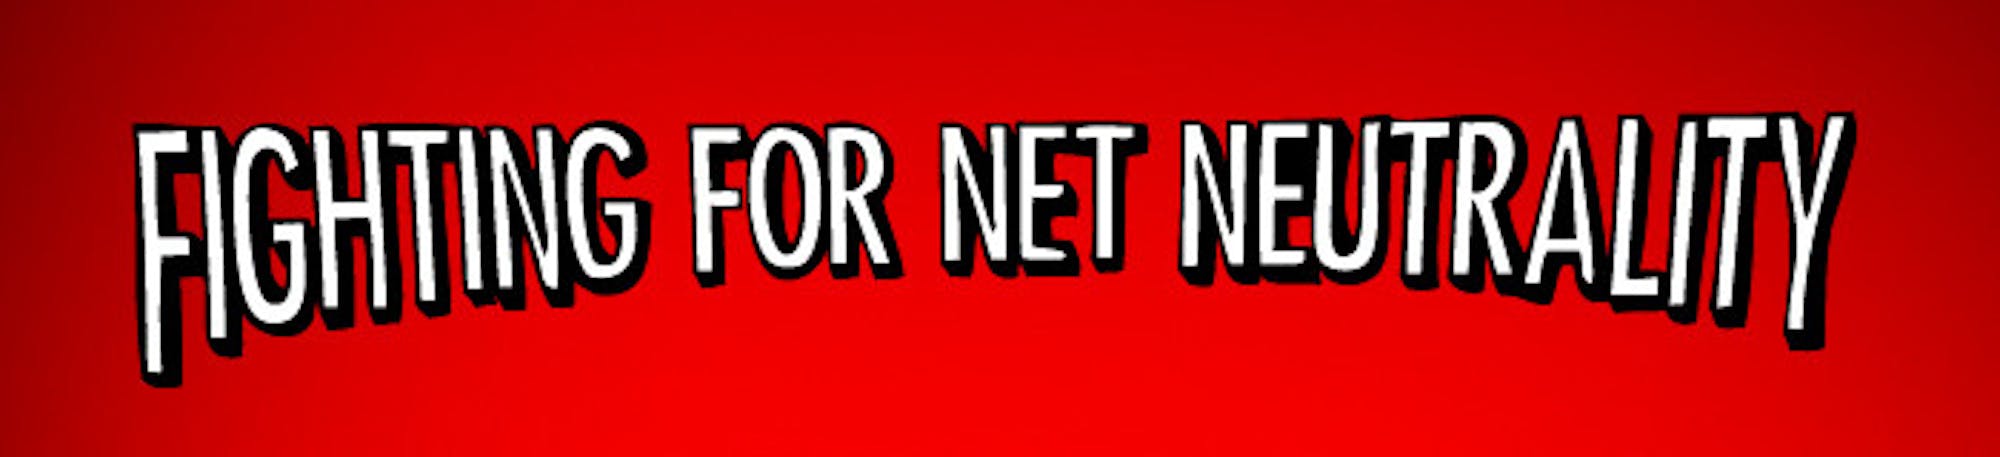 NetNeutrality_WEB